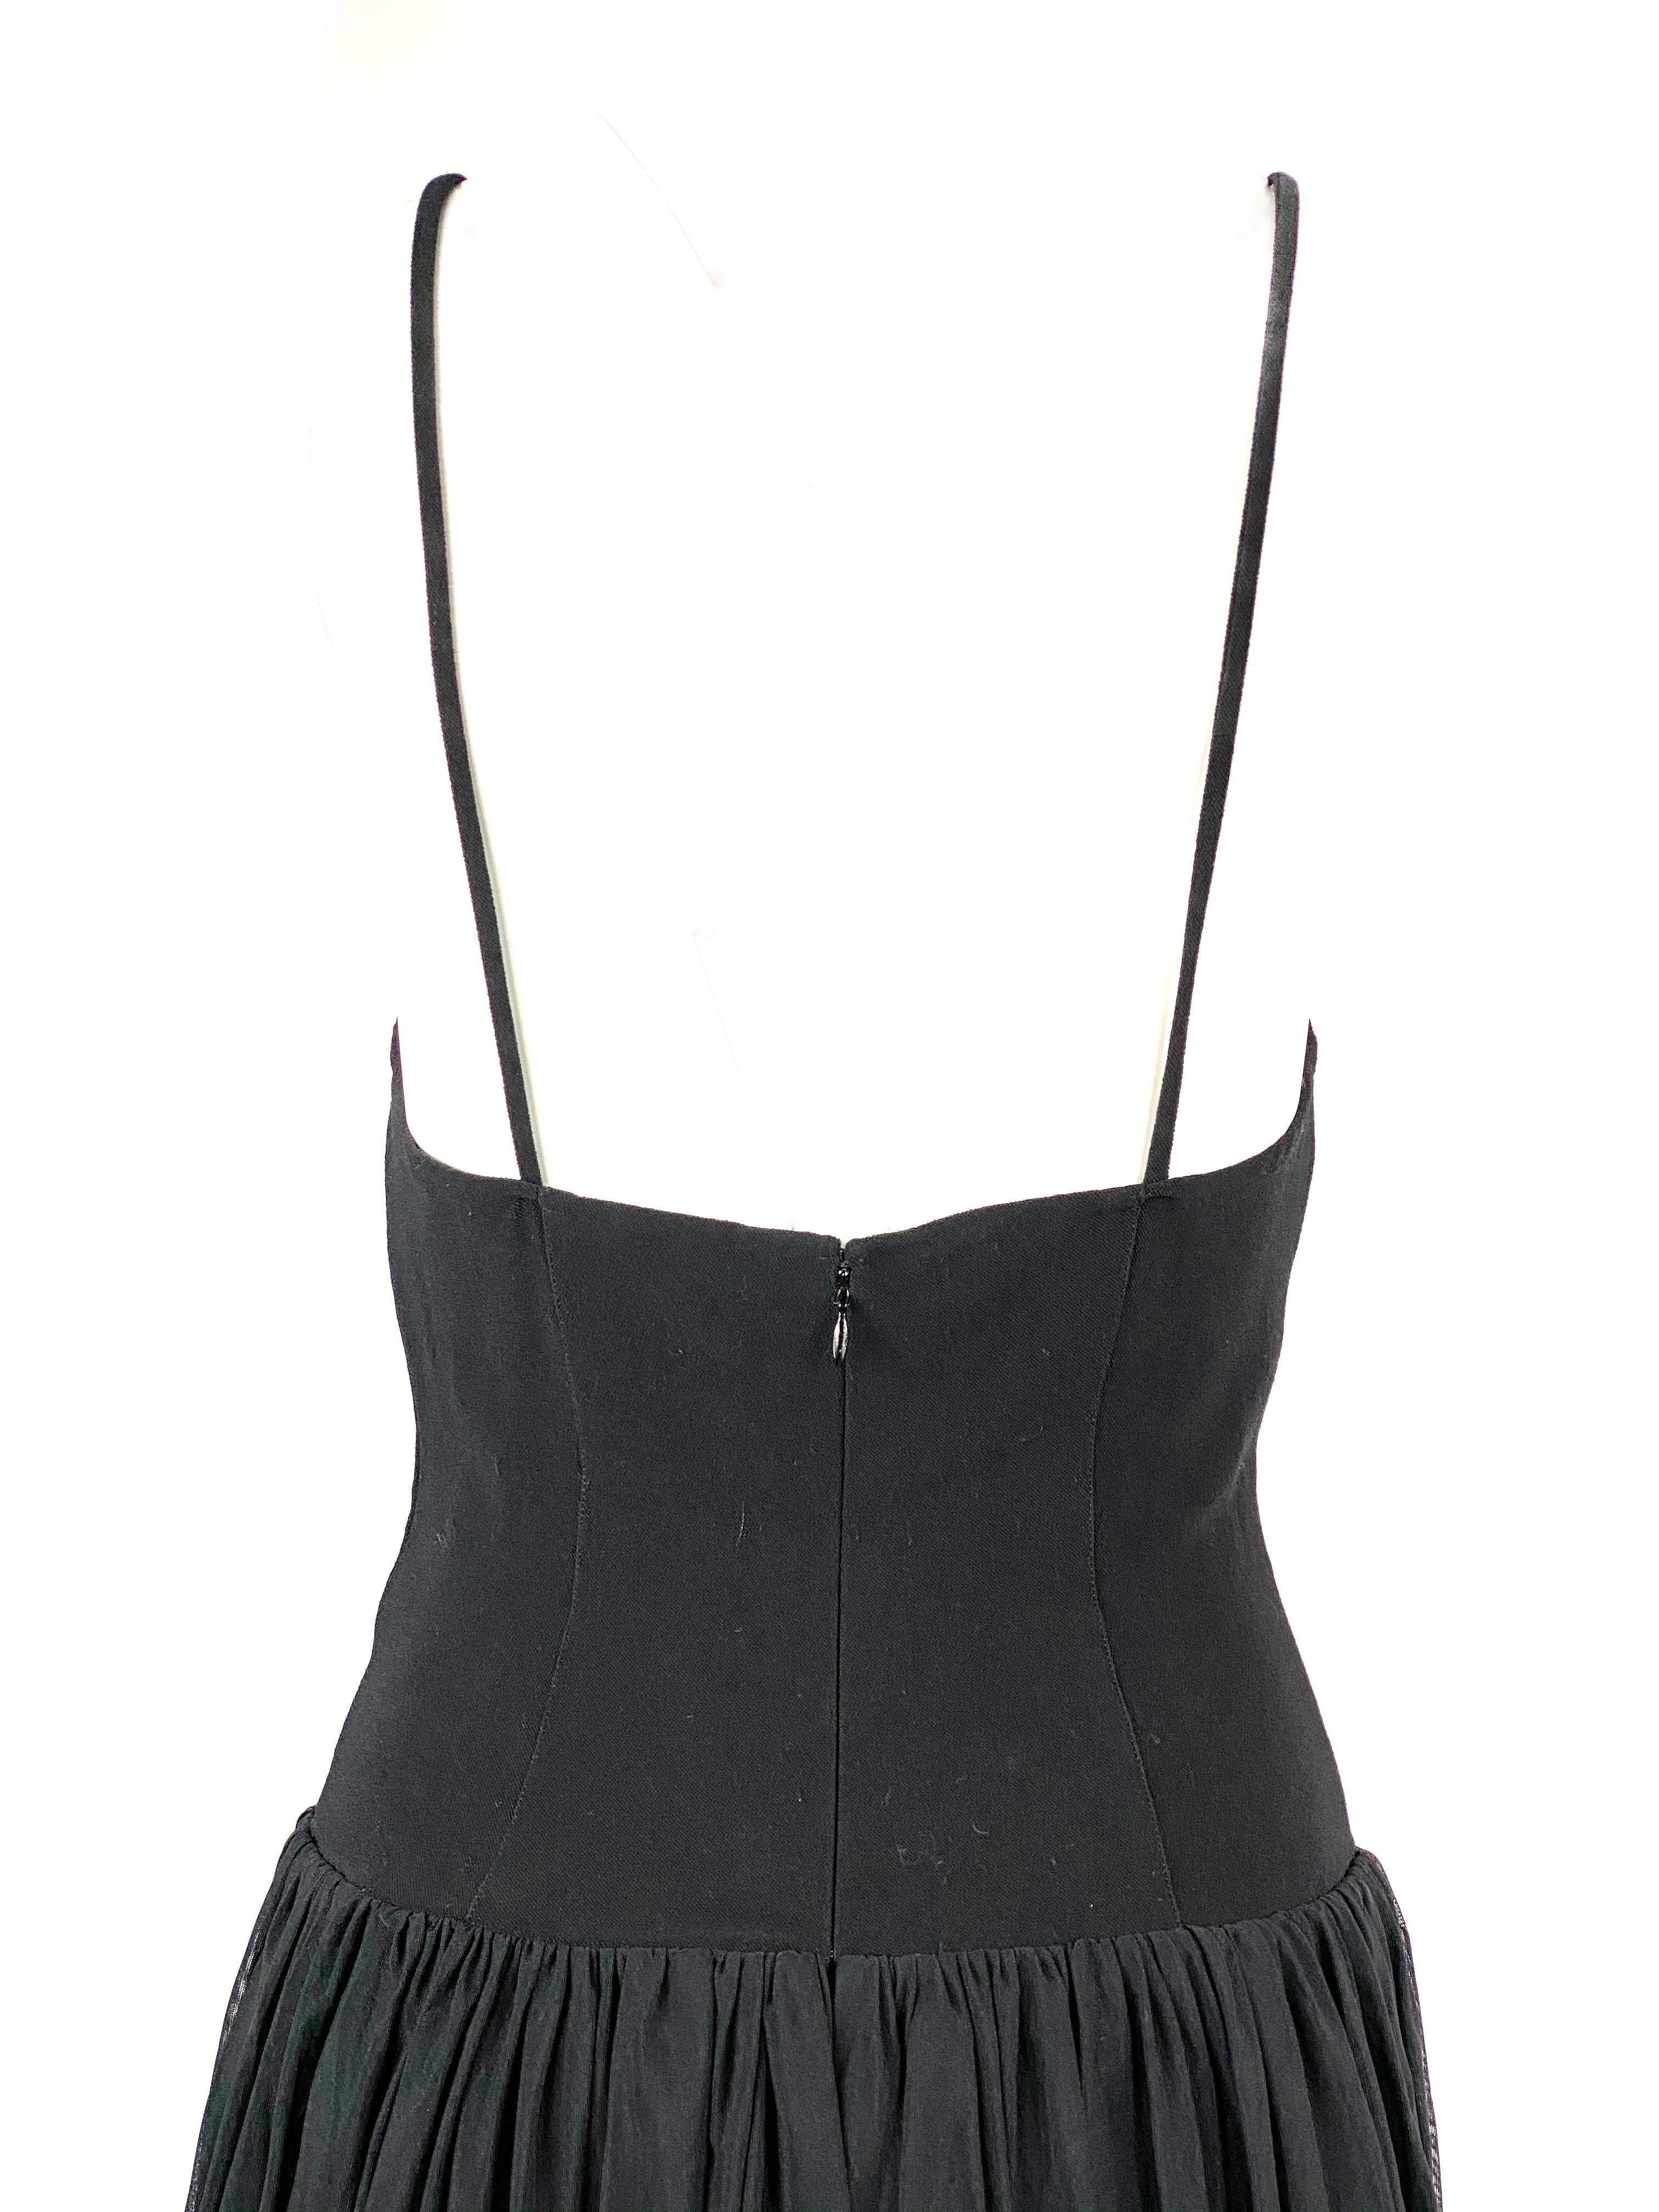 Karl Lagerfeld Black Spaghetti Strap Mini Dress Size 40 3